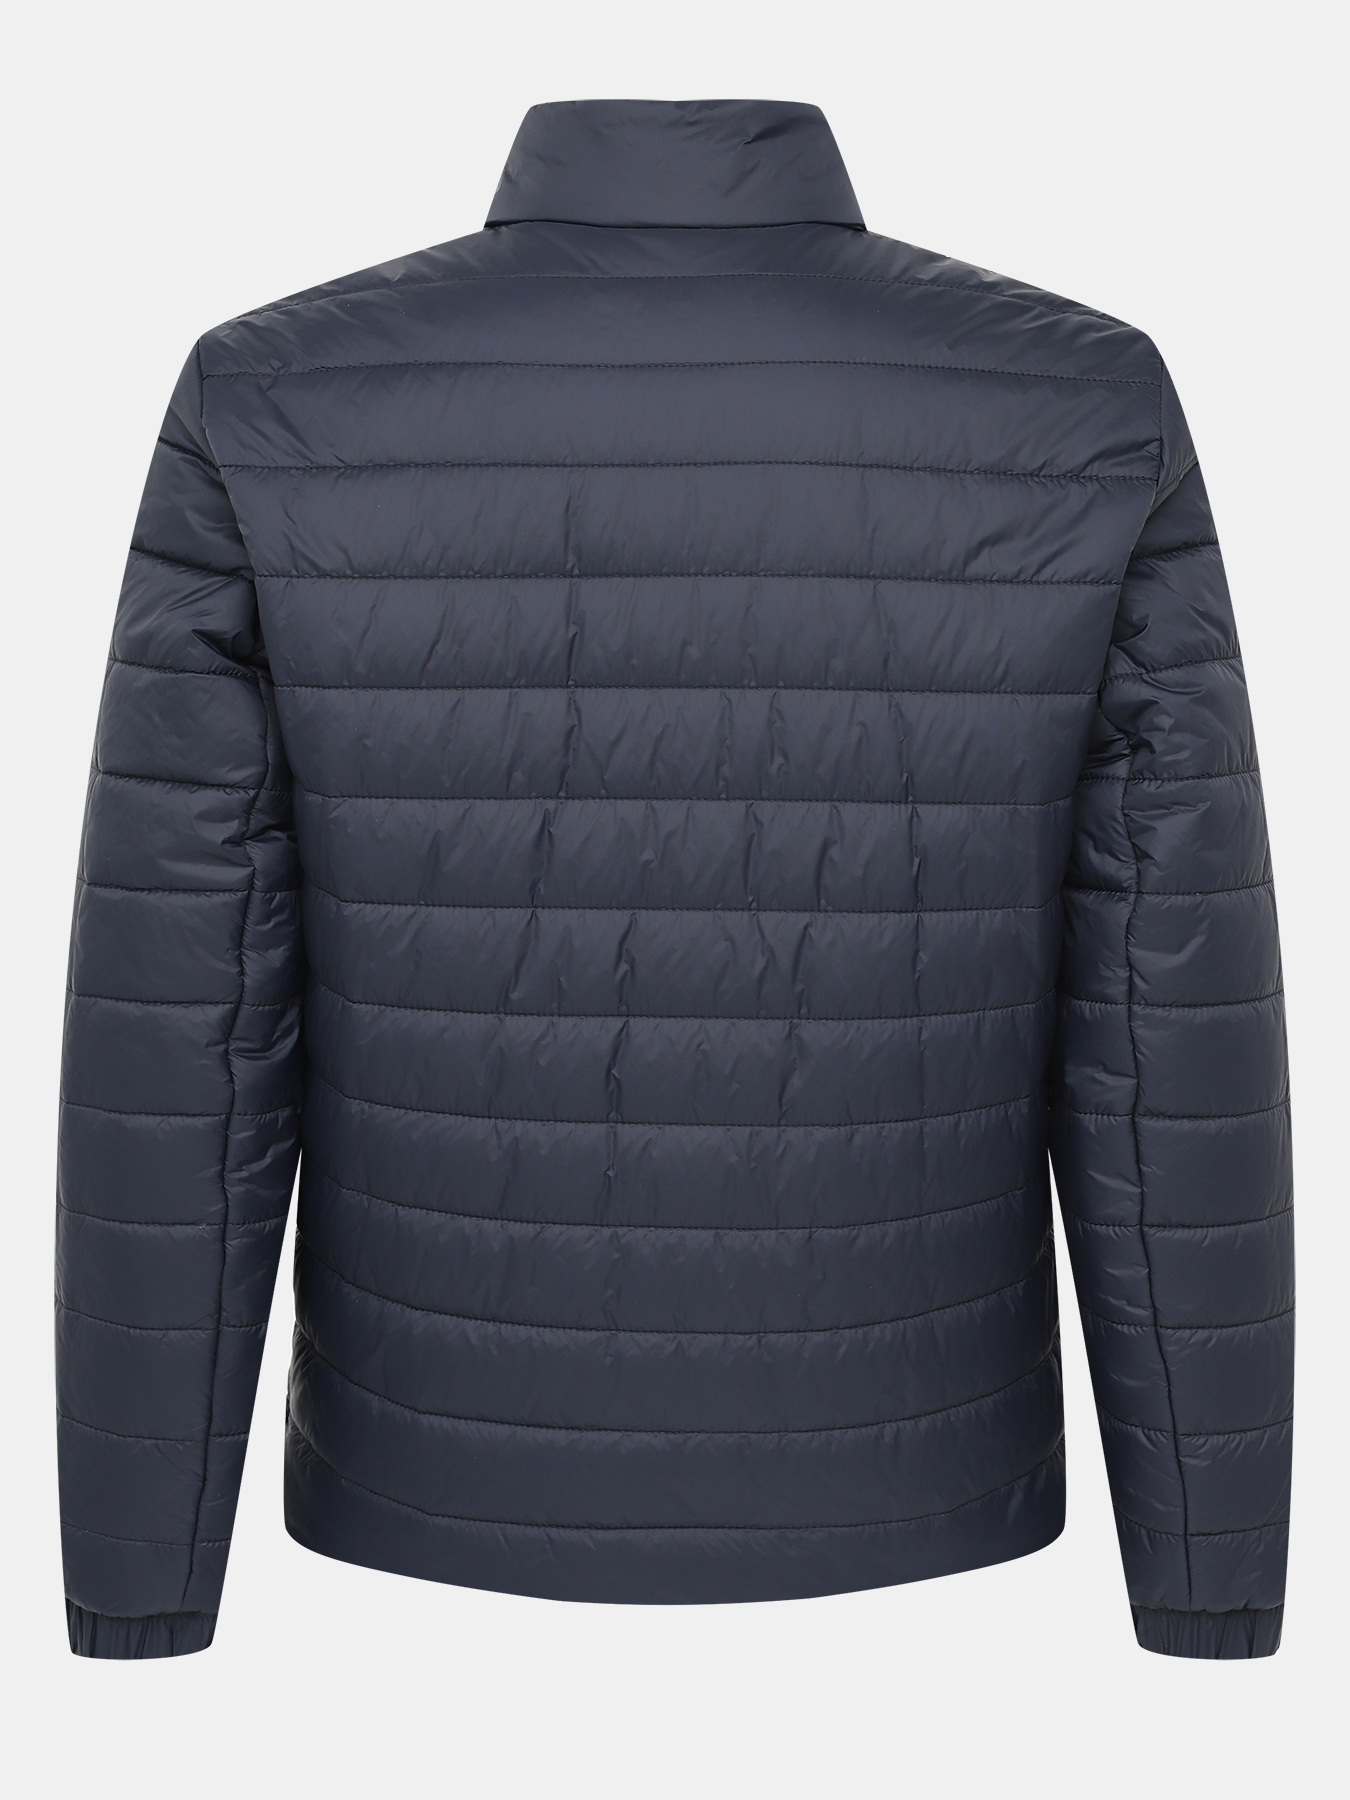 Куртка Benti HUGO 421240-046, цвет темно-синий, размер 54-56 - фото 2